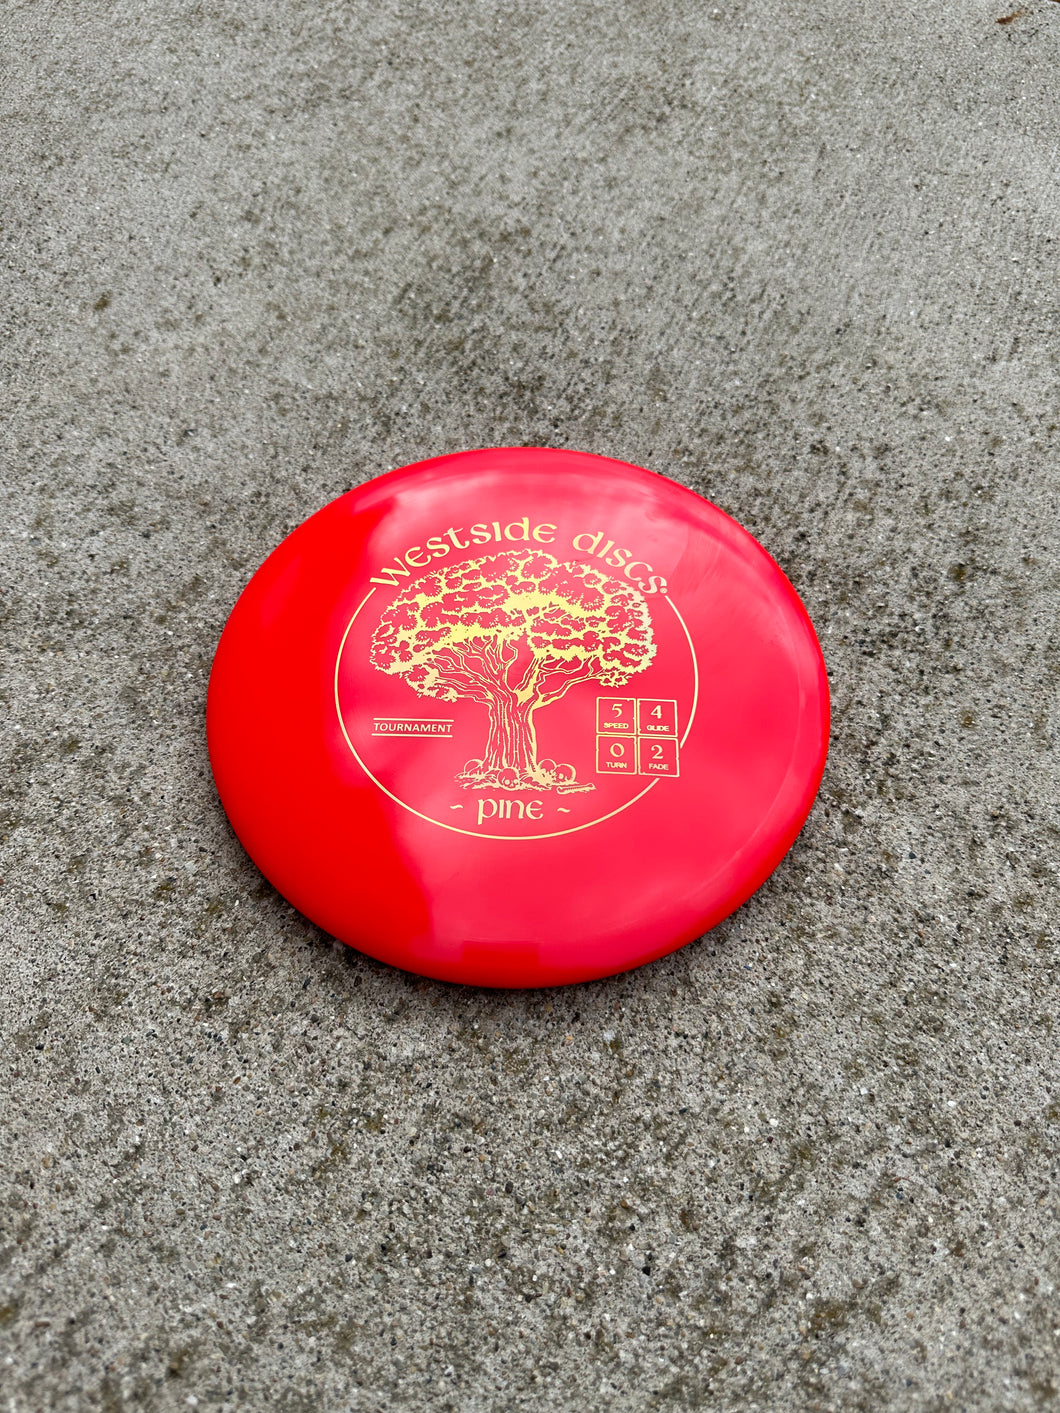 Westside discs Pine Midrange red 175g